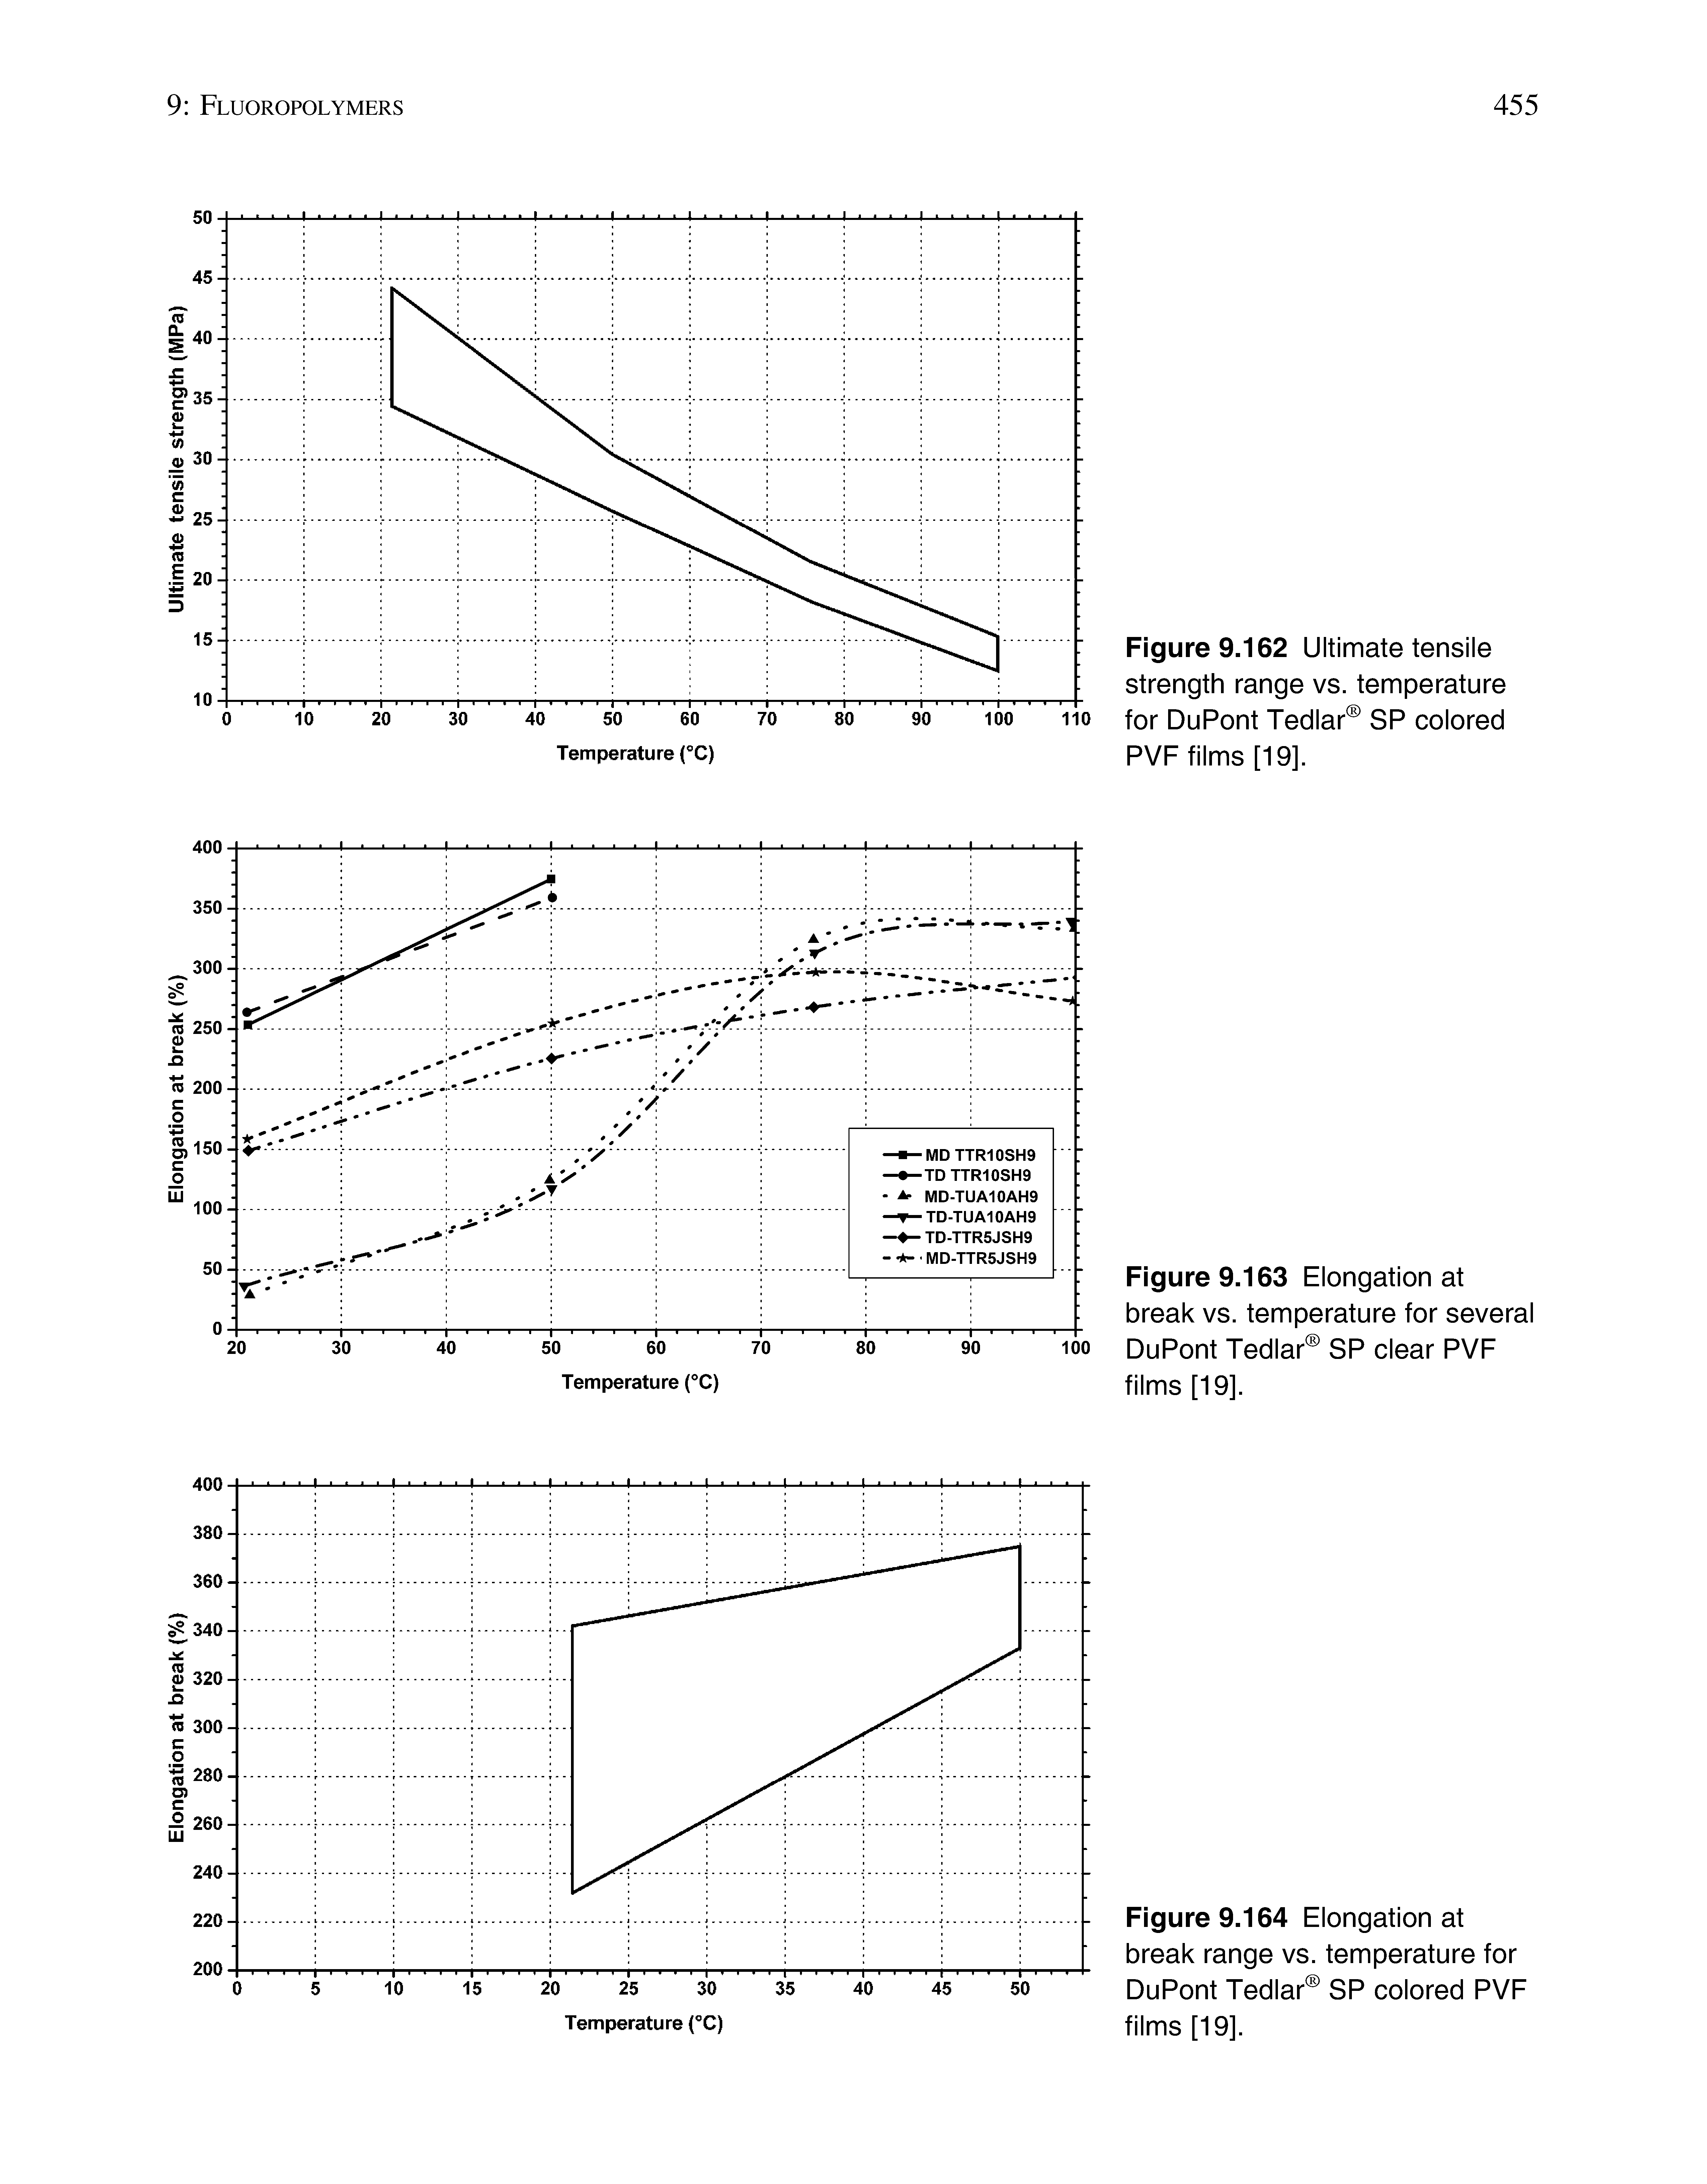 Figure 9.164 Elongation at break range vs. temperature for DuPont Tedlar SP colored PVF films [19].